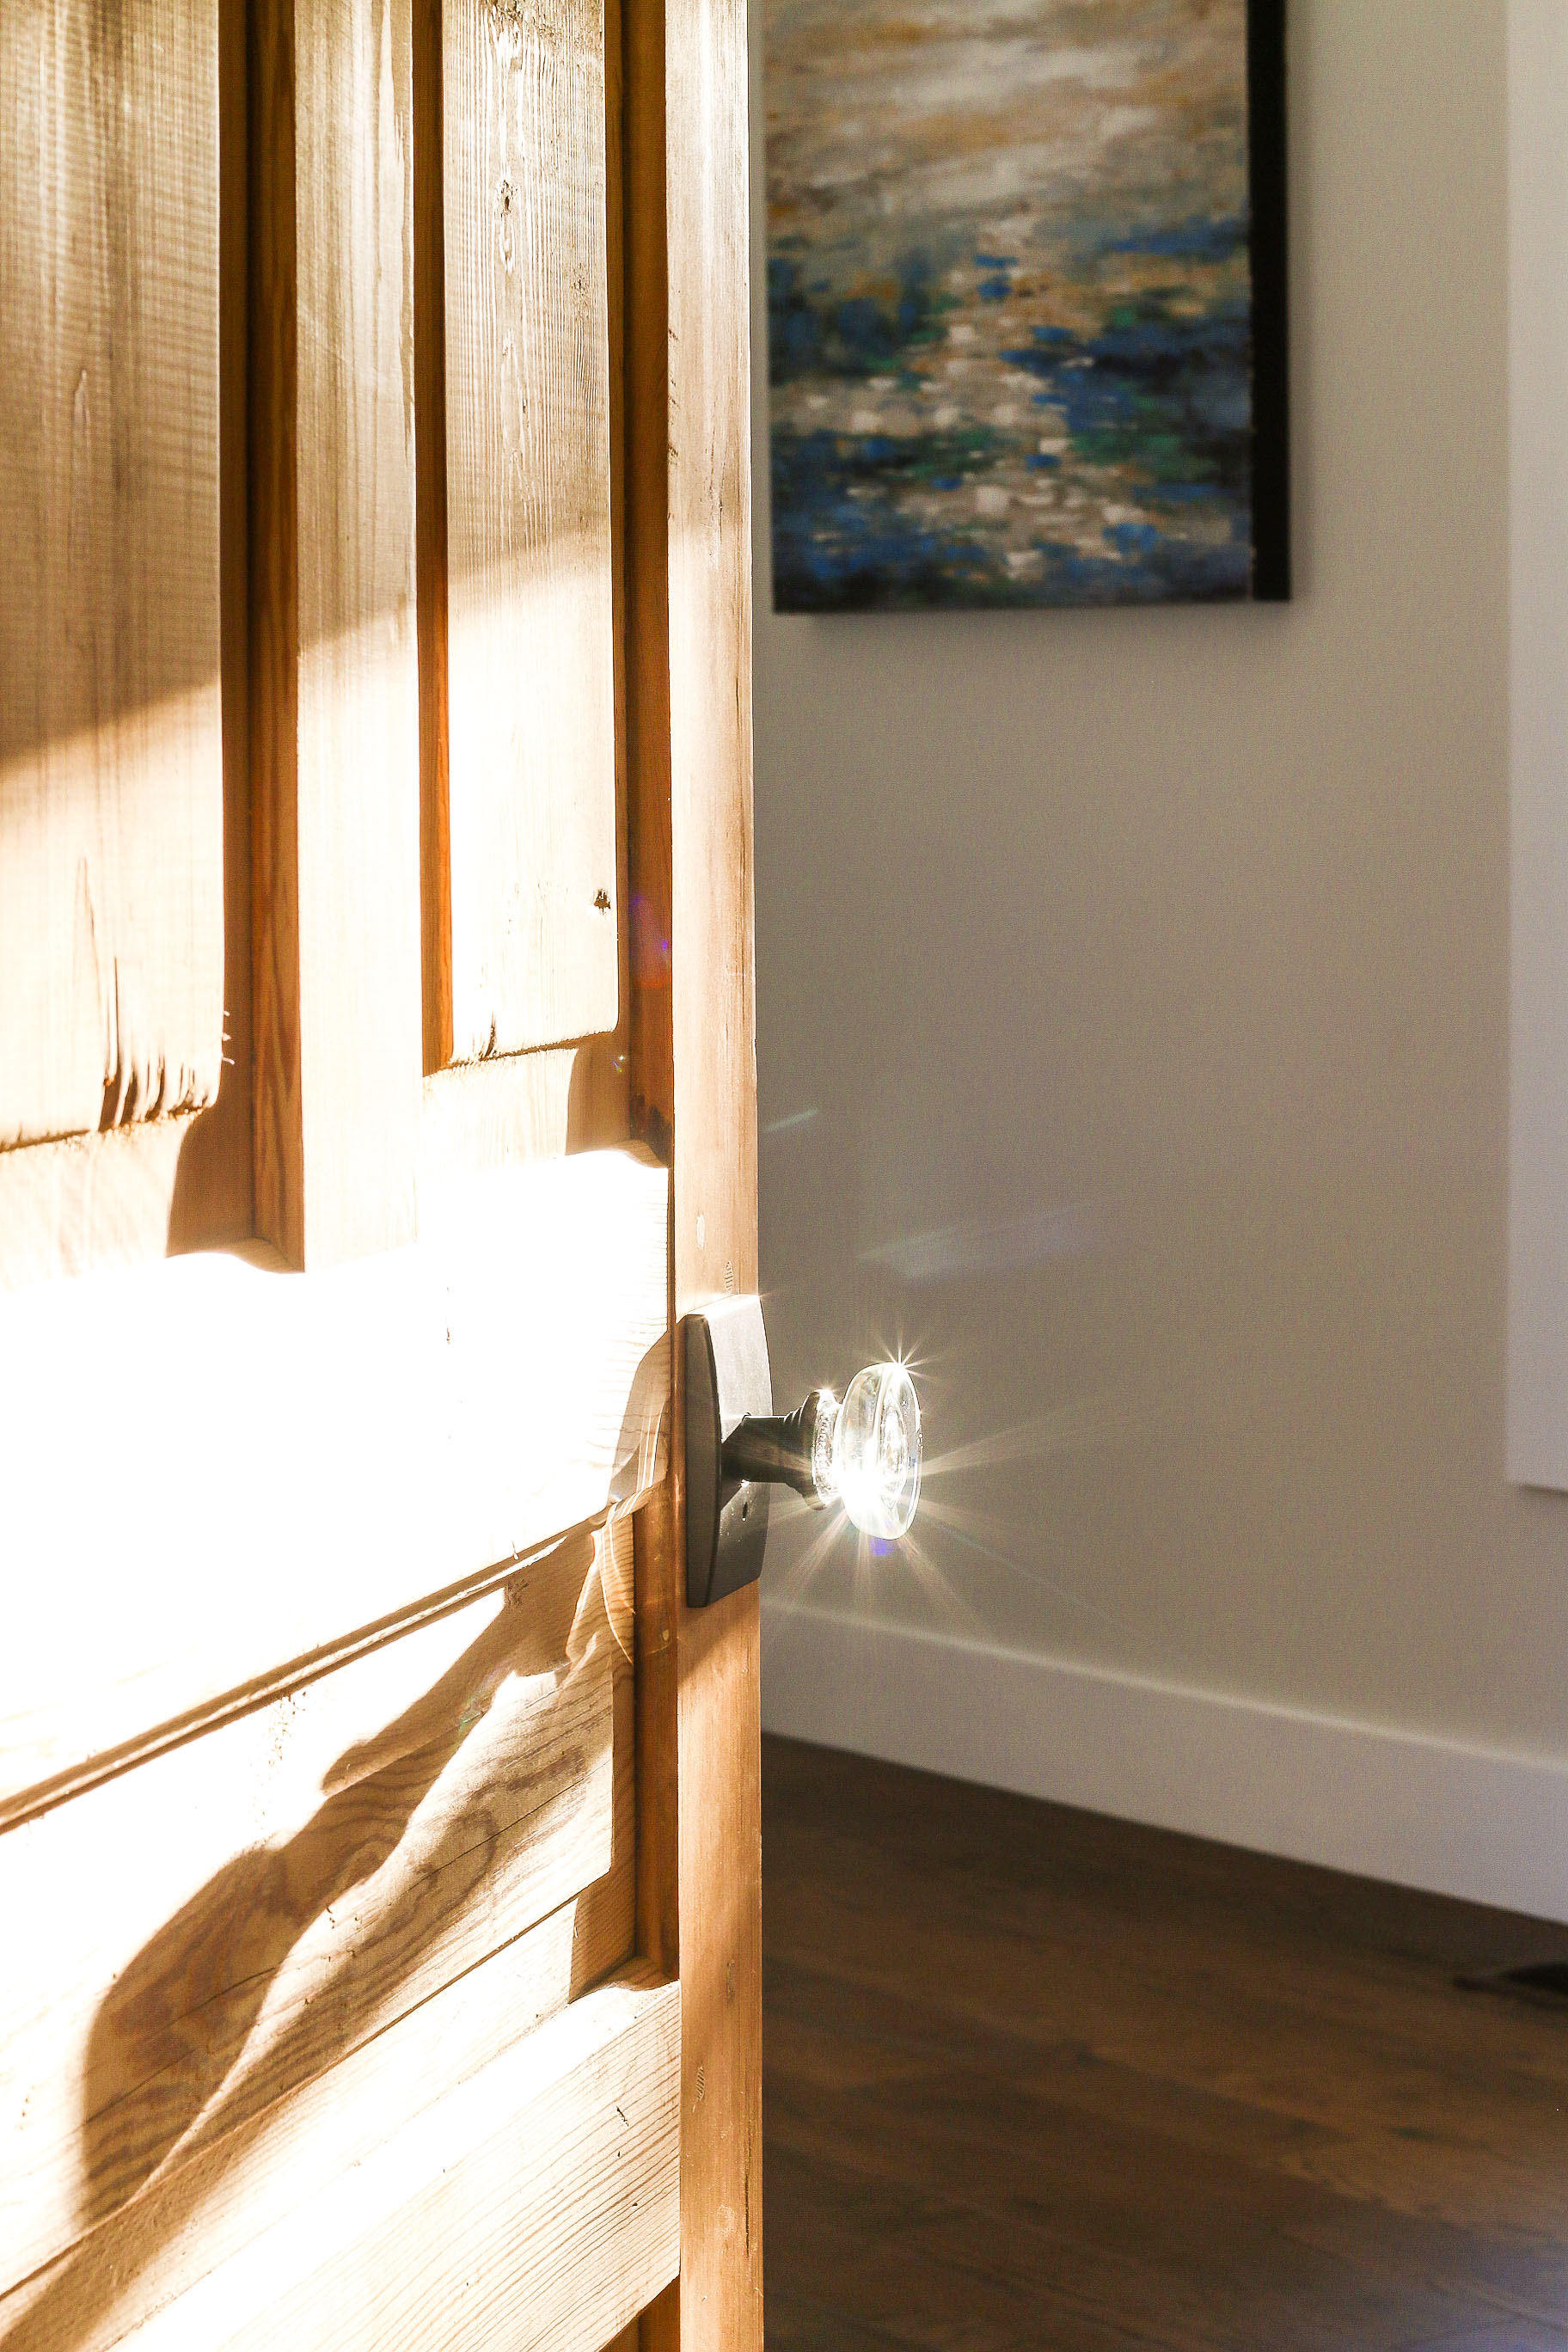 Sun glinting off glass door knob on raw wood door